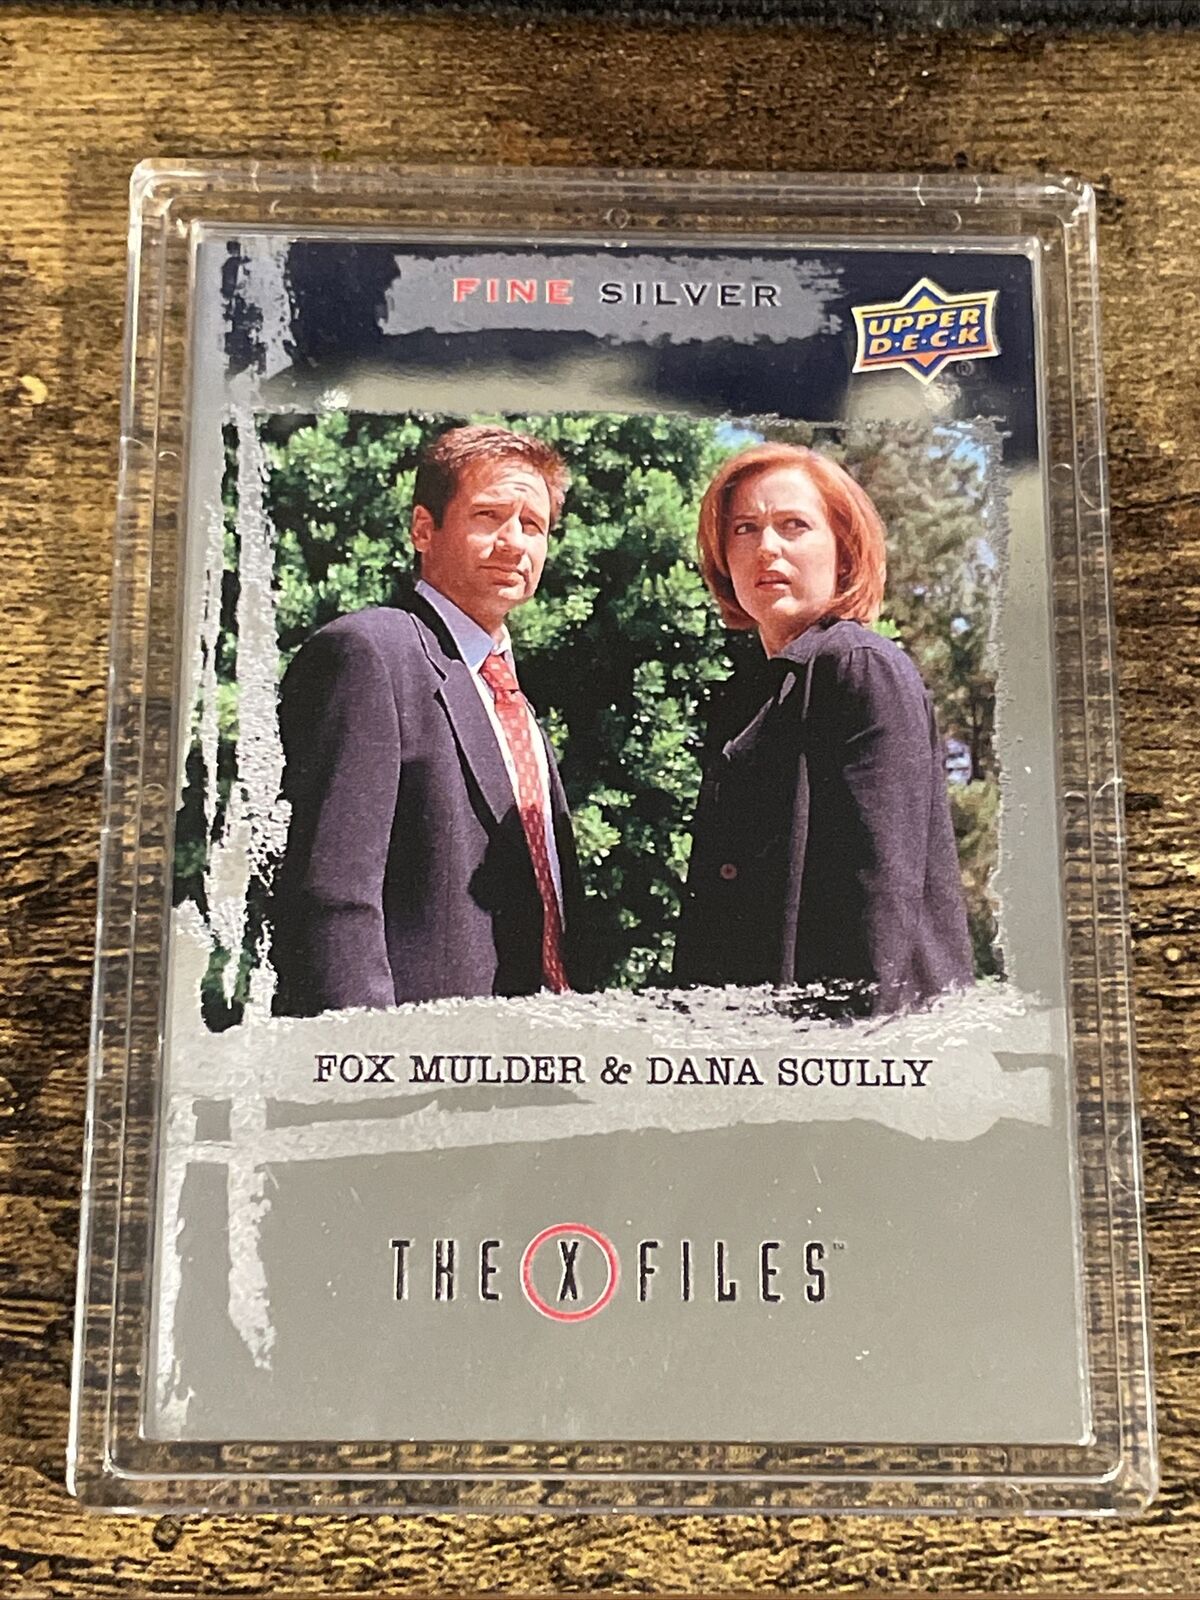 Upper Deck Employee Exclusive X-Files 2 Troy OZ Brilliant .999 Fine Silver Card